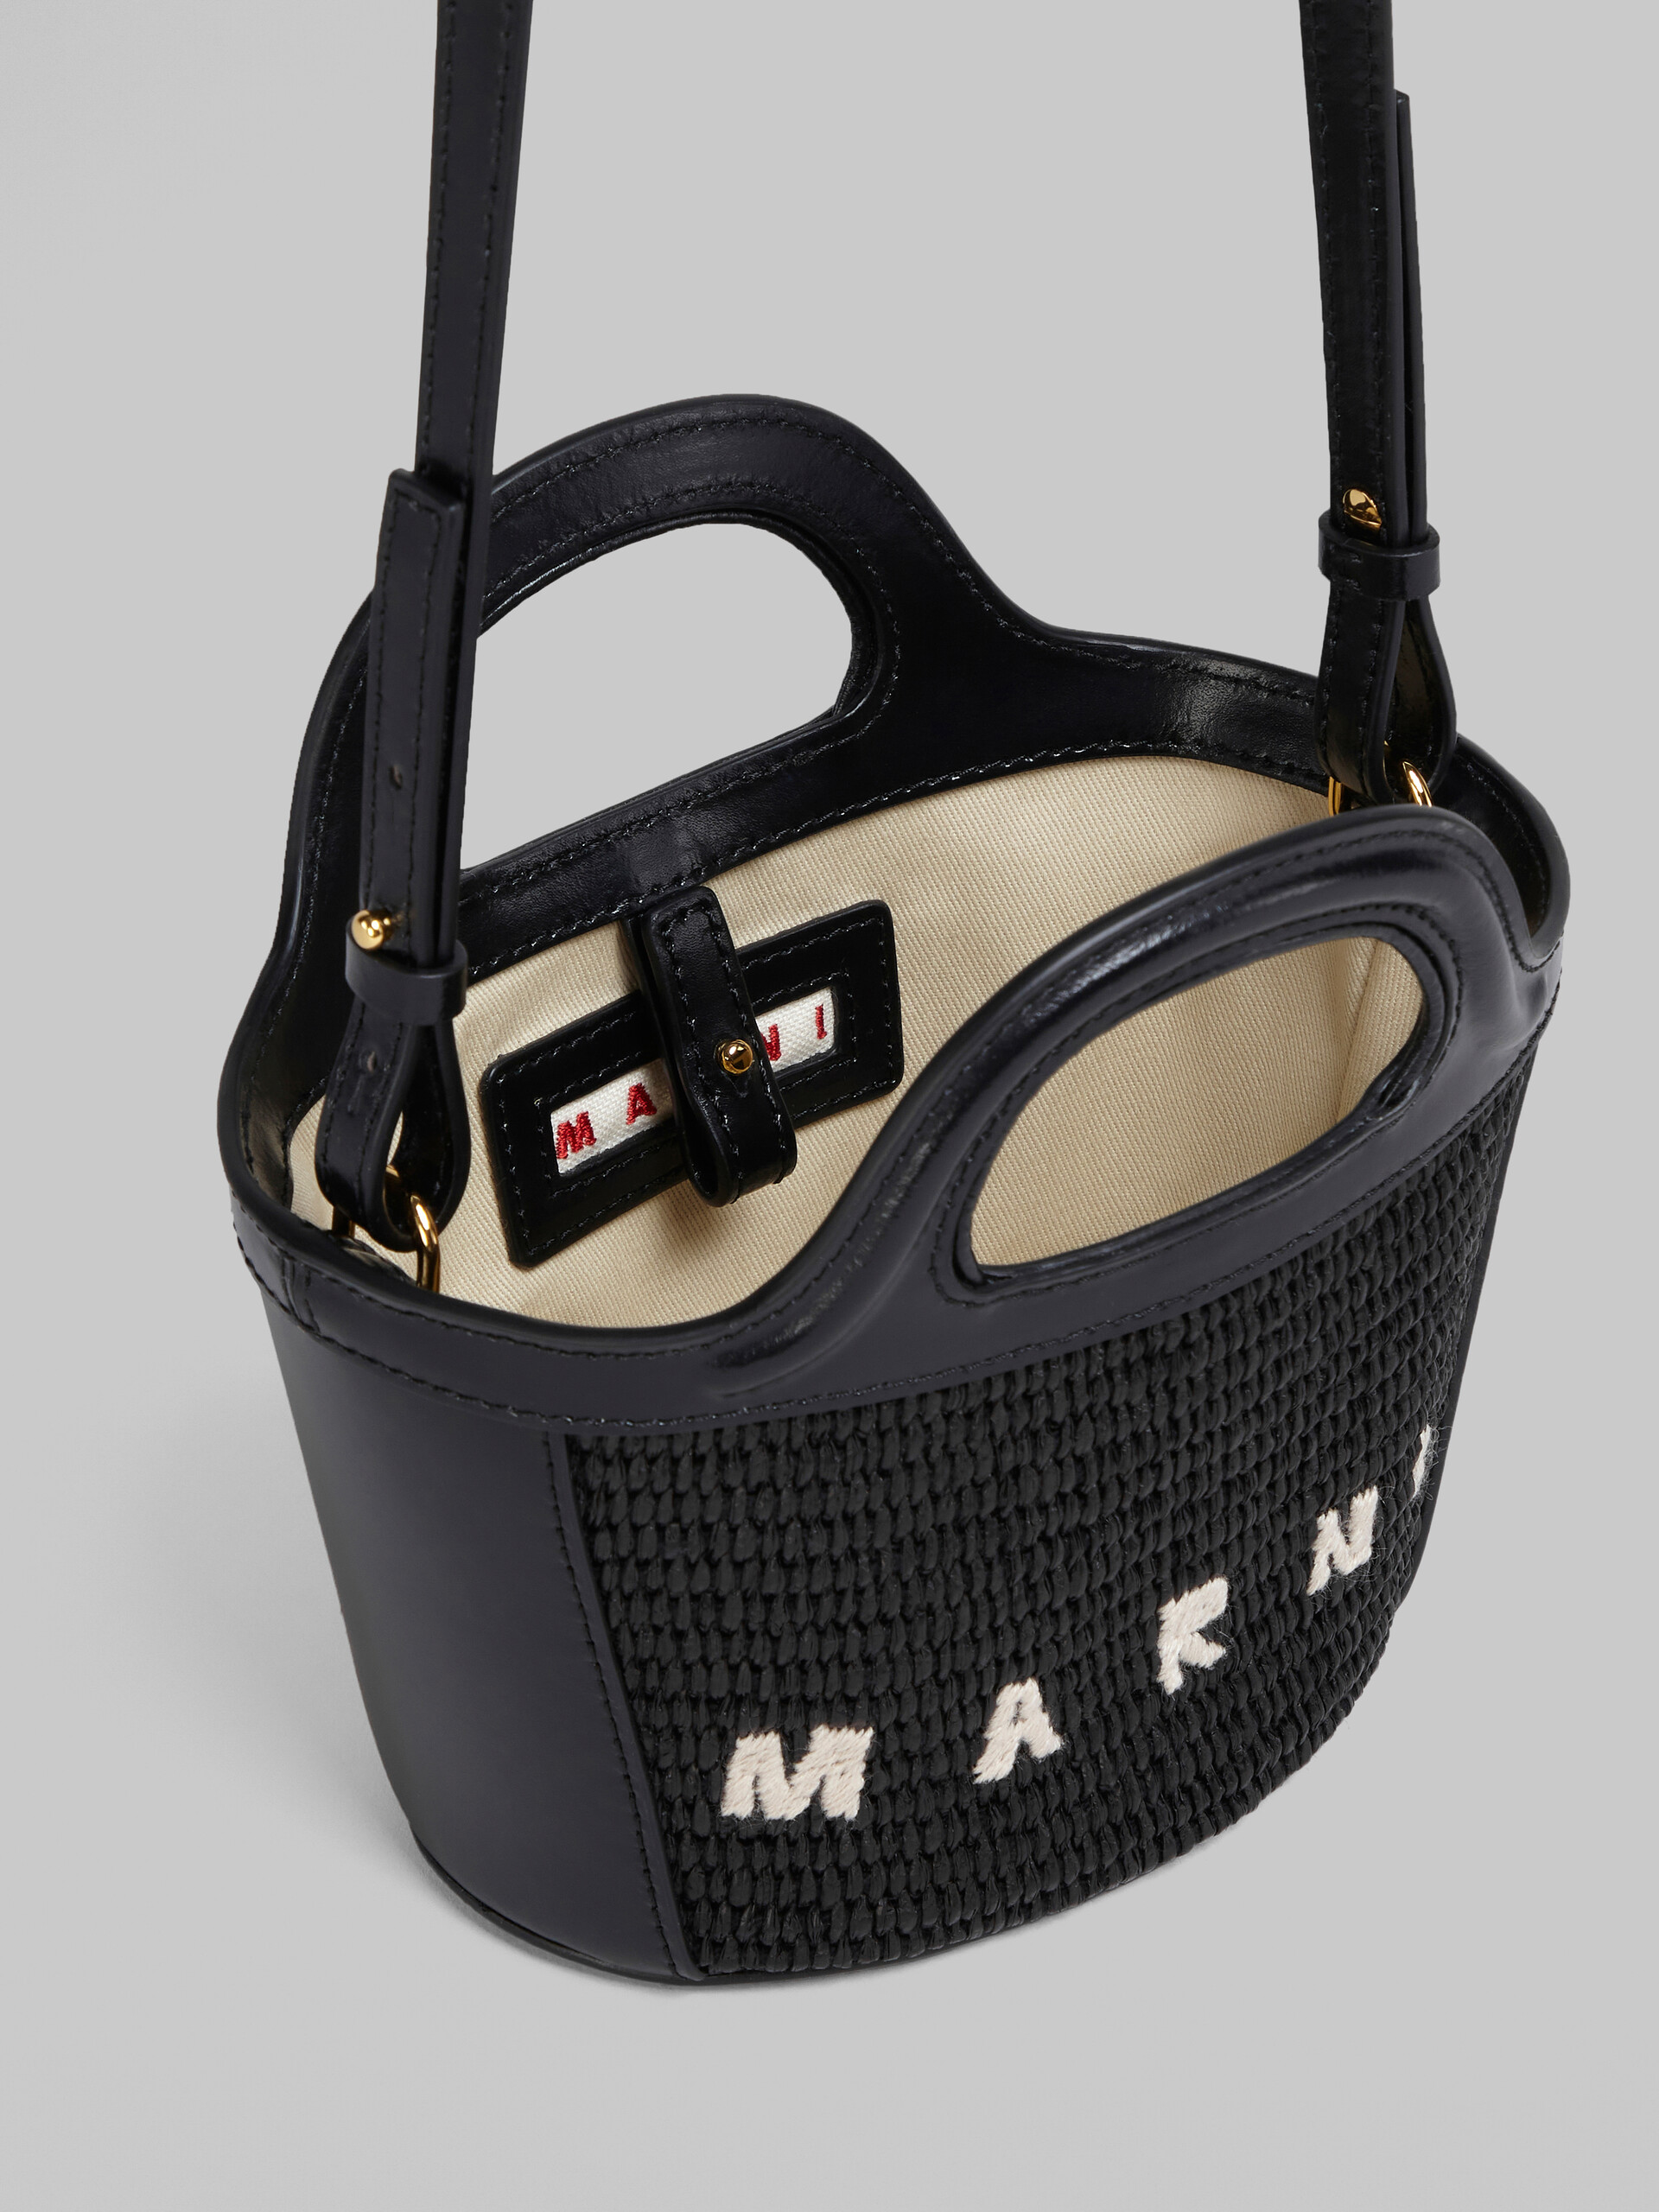 TROPICALIA micro bag in black leather and raffia - Handbag - Image 4